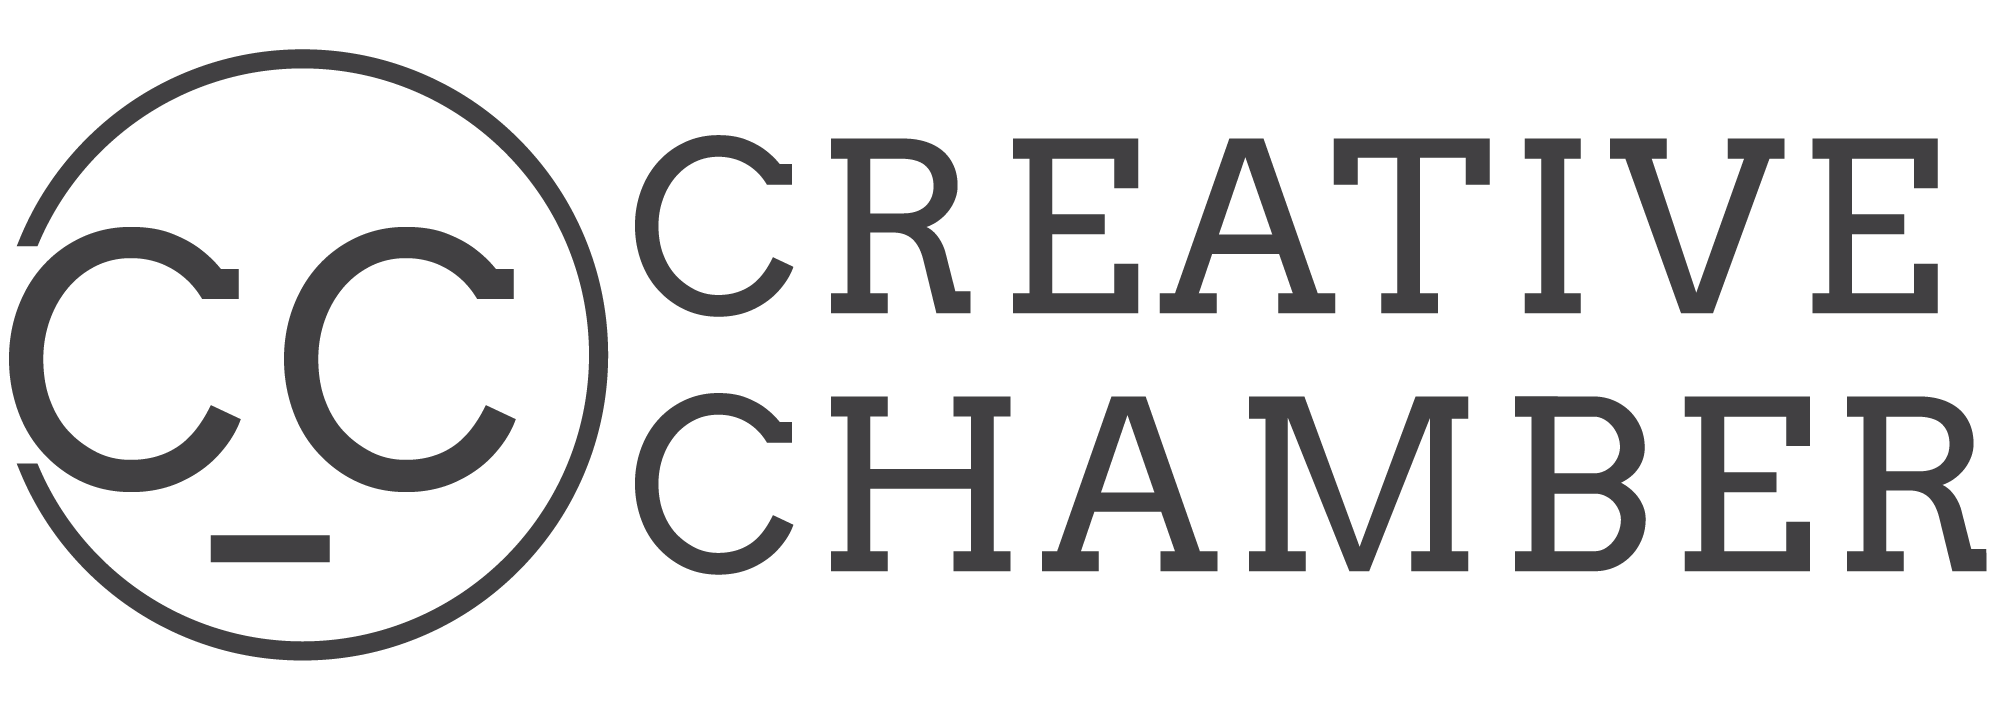 Creative Chamber